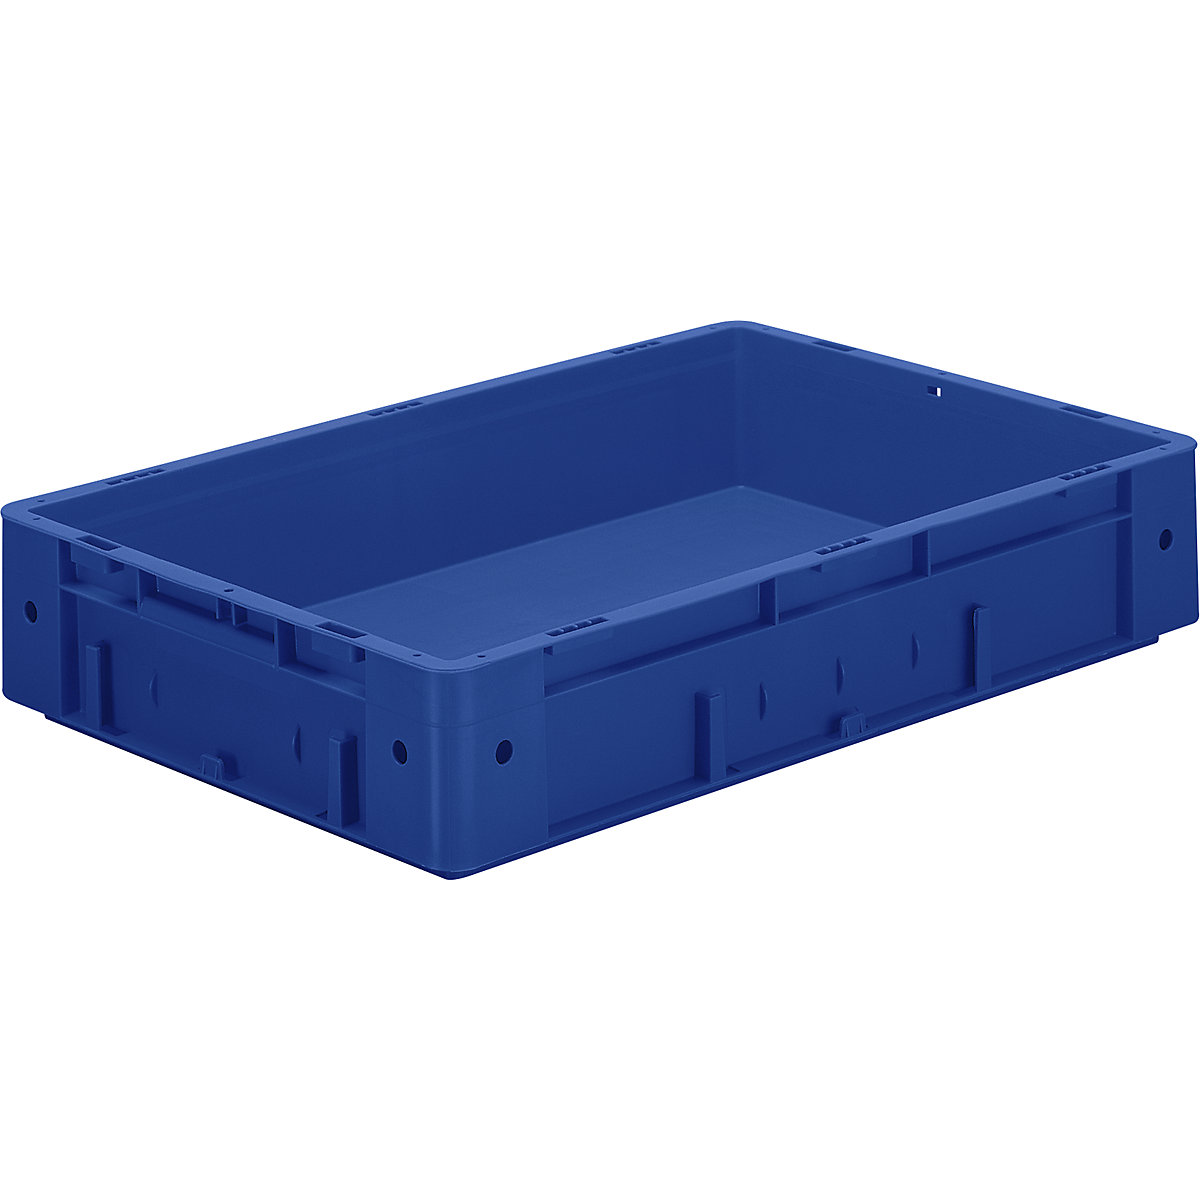 Schwerlast-Euro-Behälter, Polypropylen, Volumen 20 l, LxBxH 600 x 400 x 120 mm, Wände geschlossen, Boden geschlossen, blau, VE 2 Stk-3